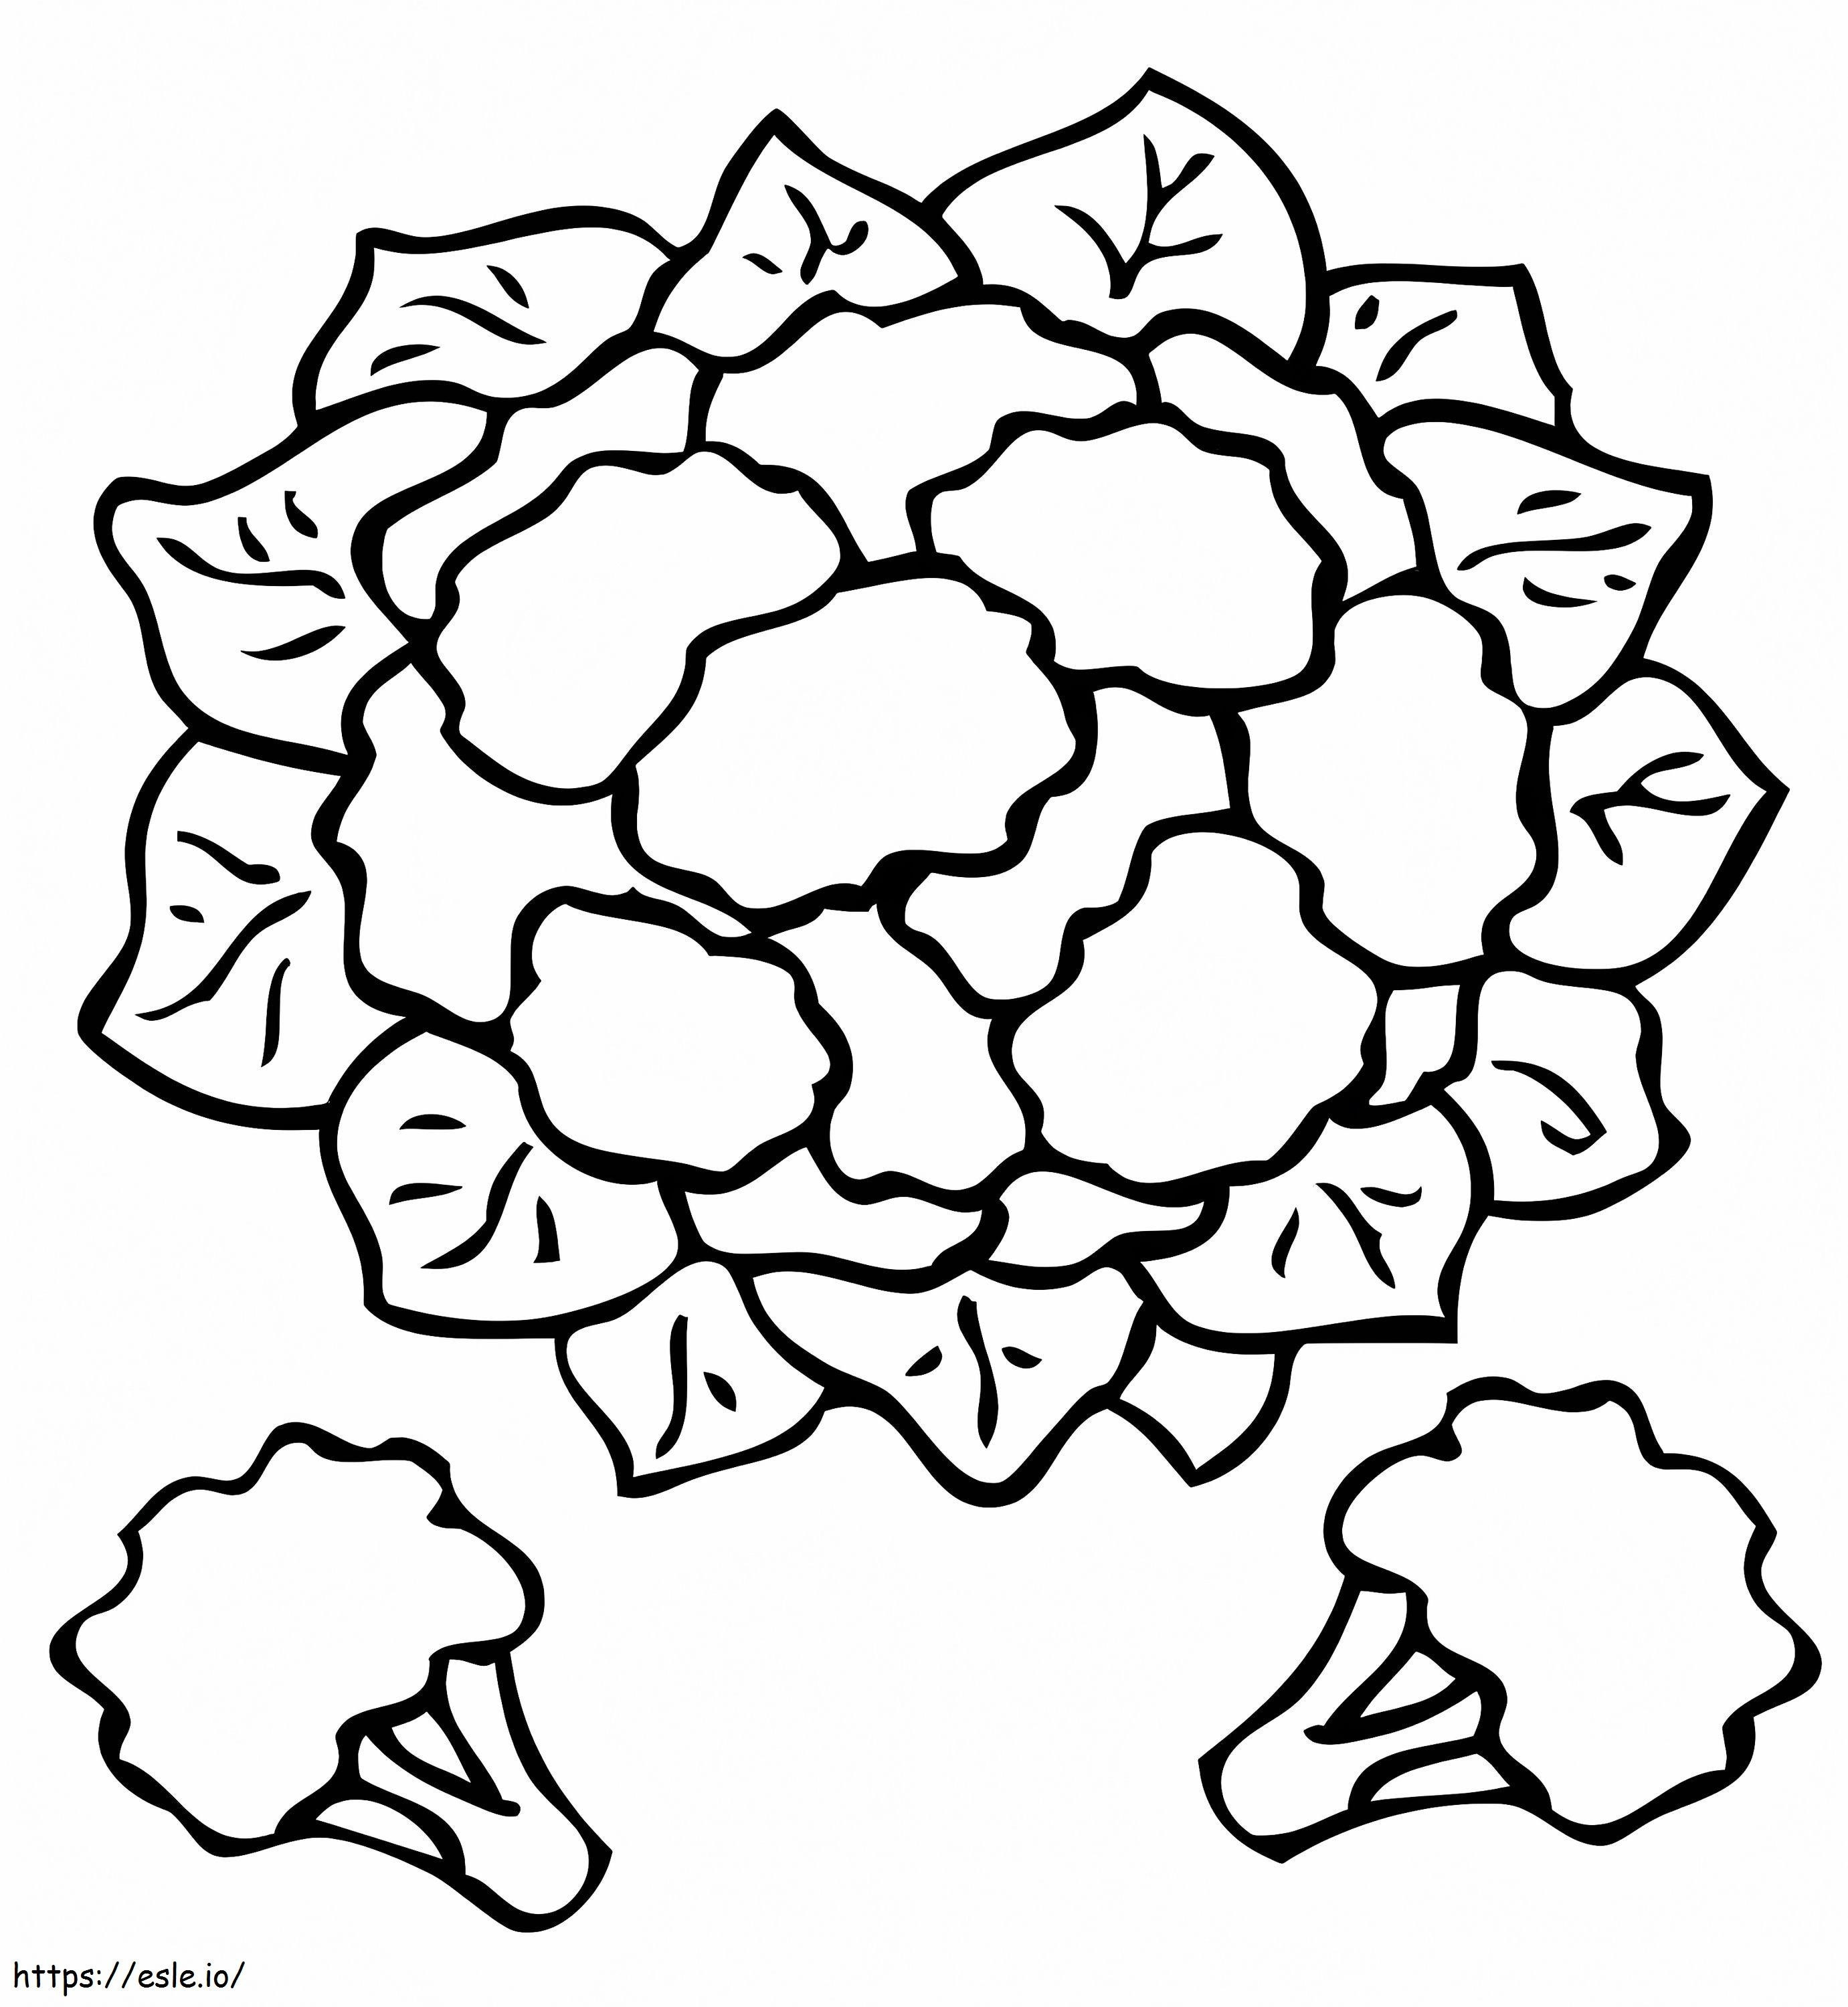 Printable Cauliflower coloring page